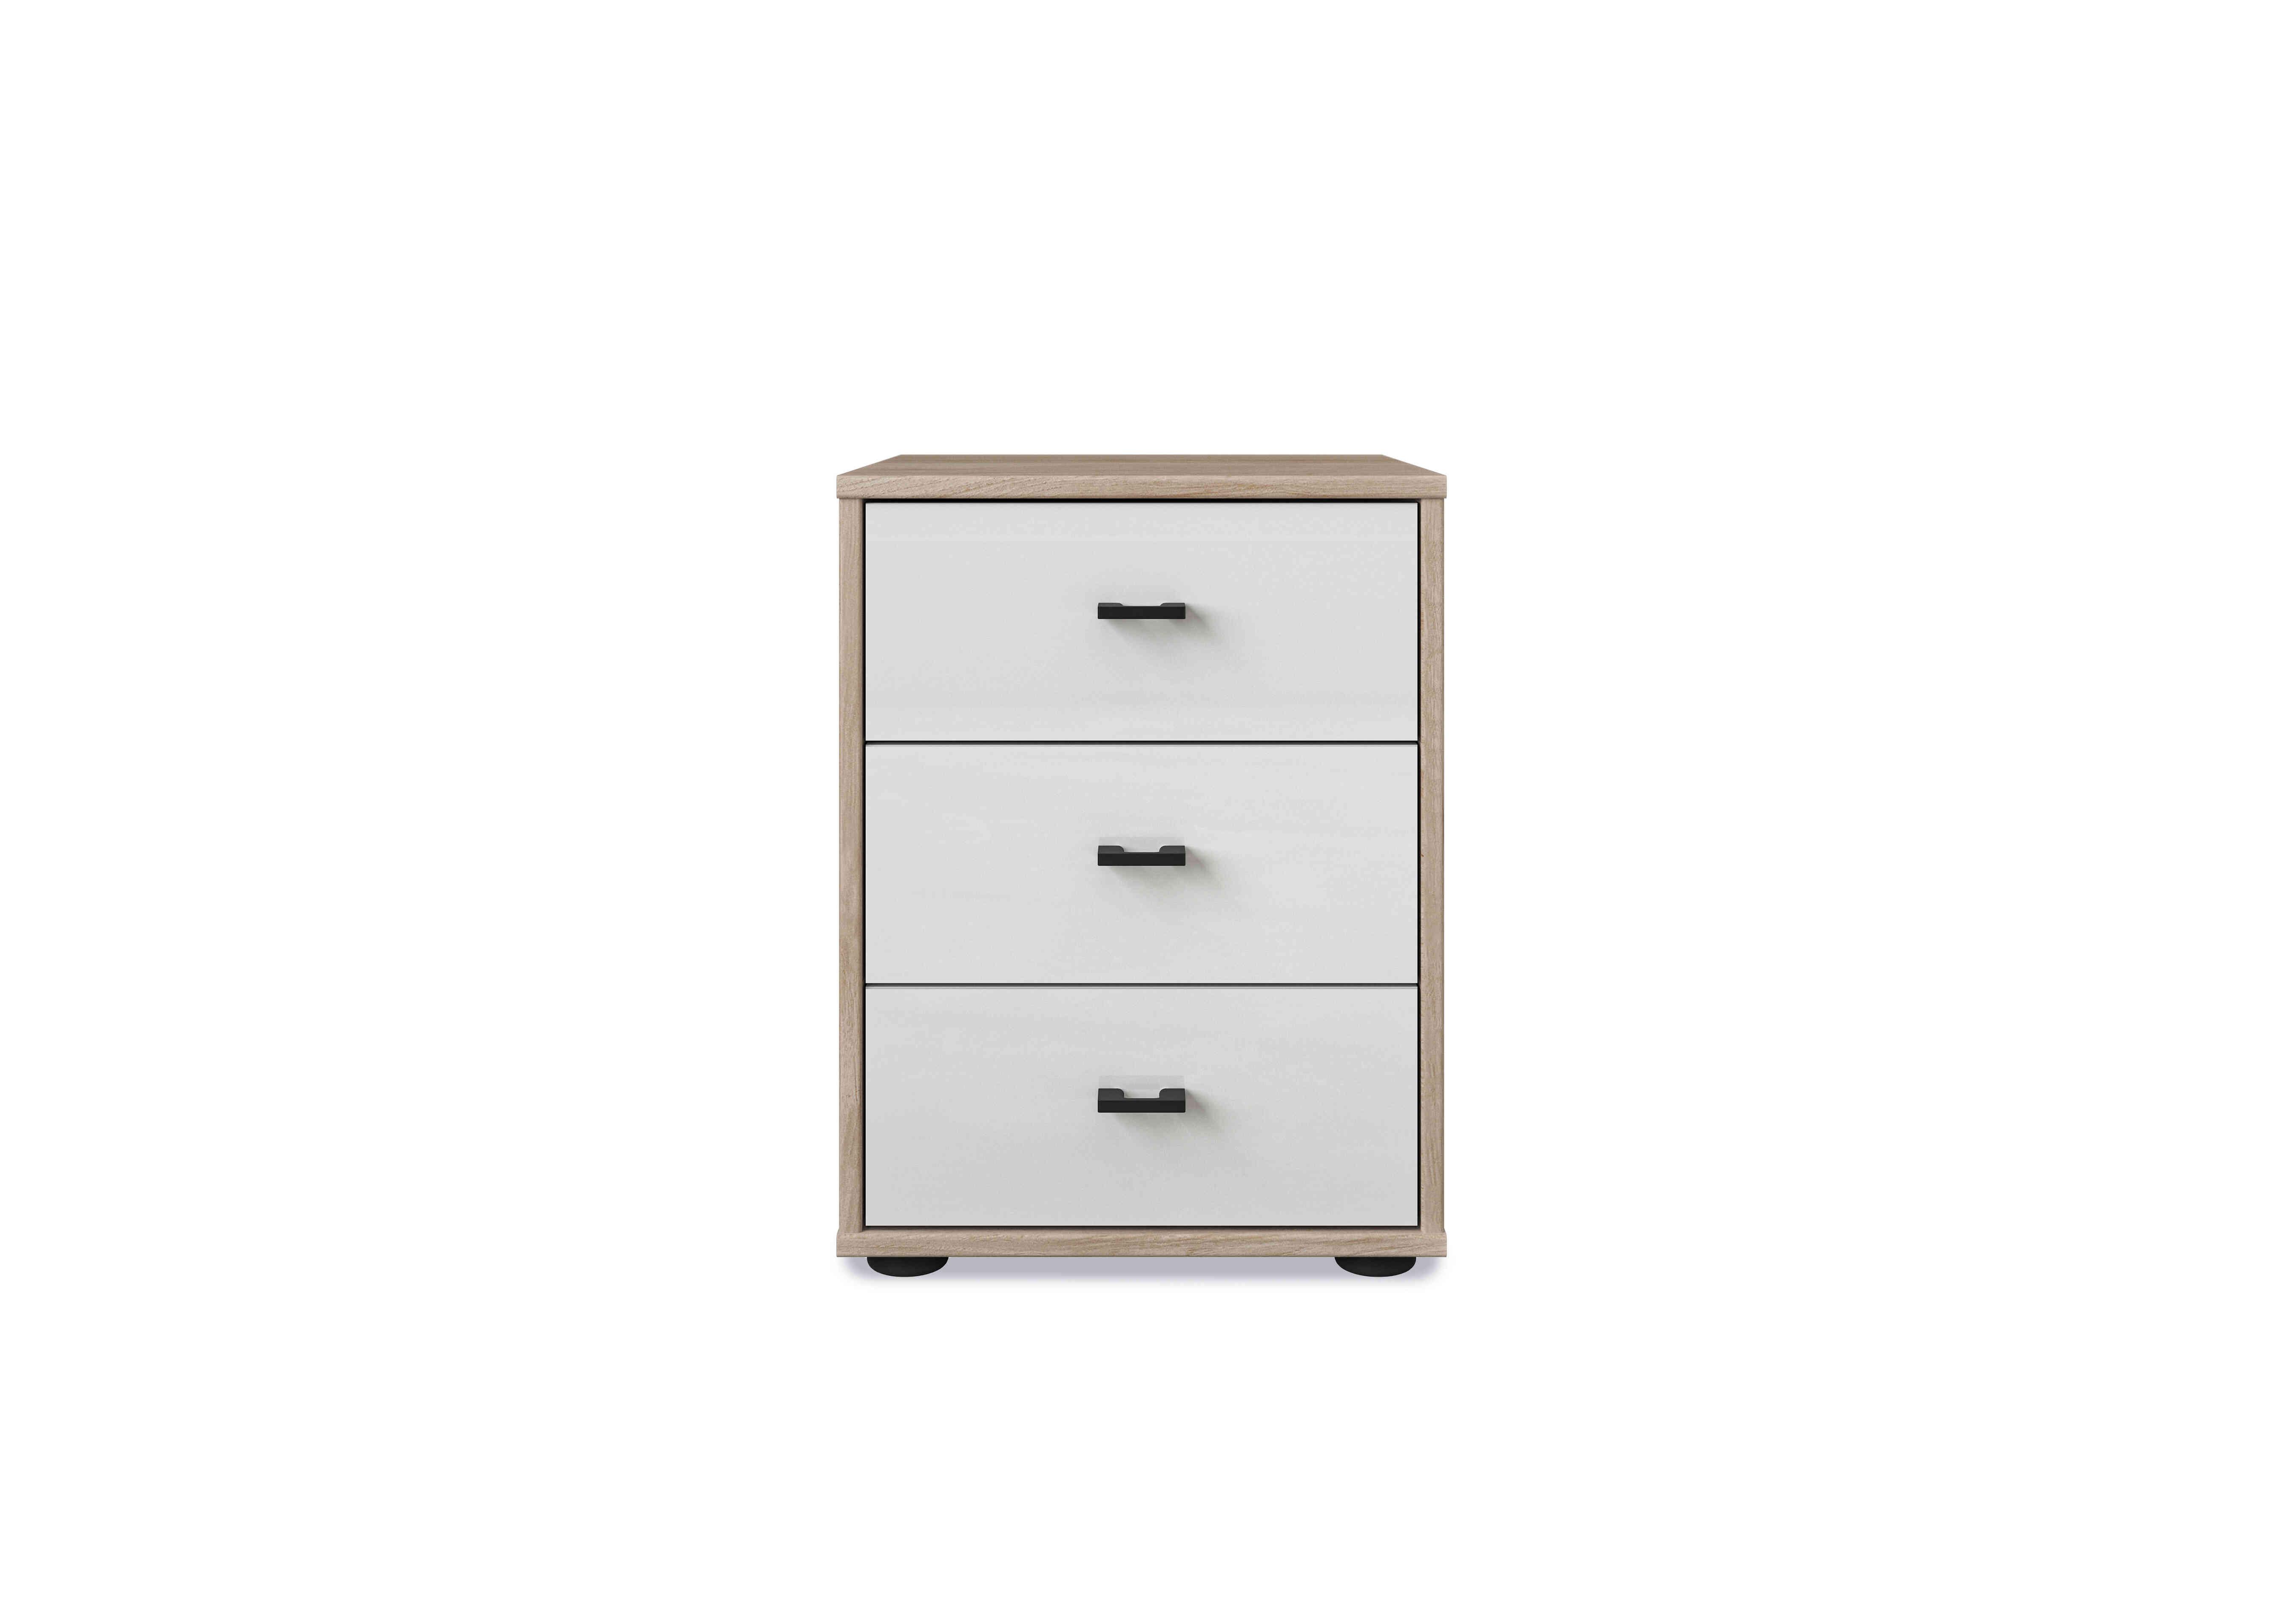 Dallas 40cm 3 Drawer Glass Bedside Cabinet in Holm Oak And White on Furniture Village